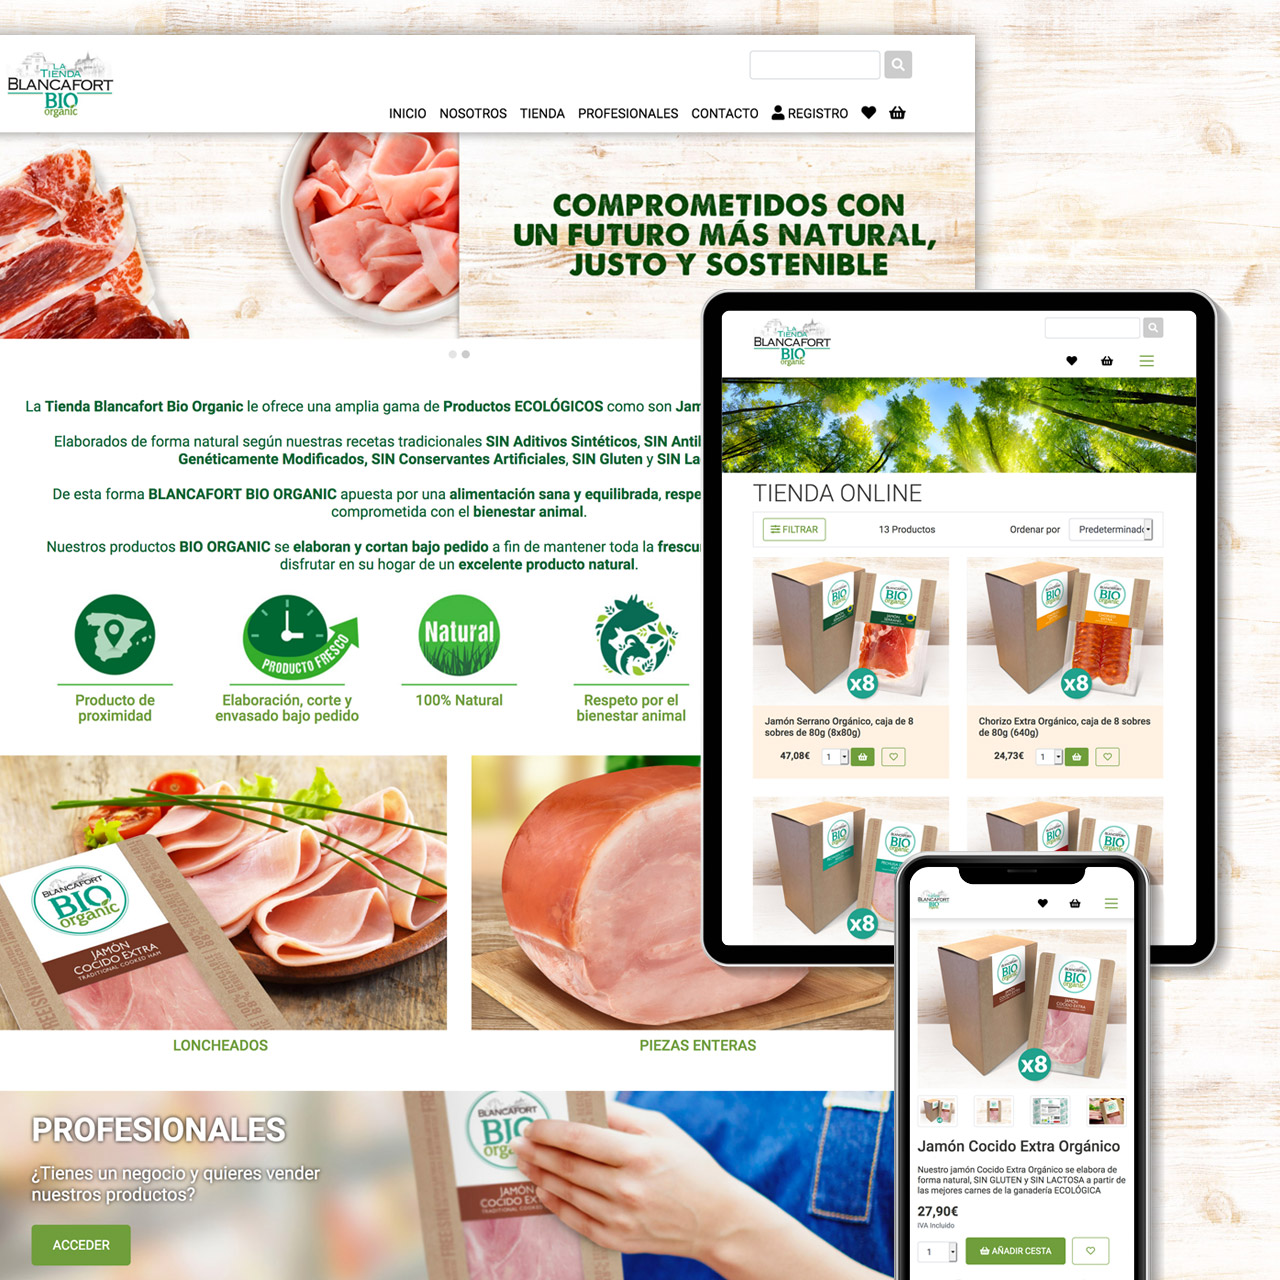 Coneixeu ja la nova botiga online de Blancafort Bio Organic?